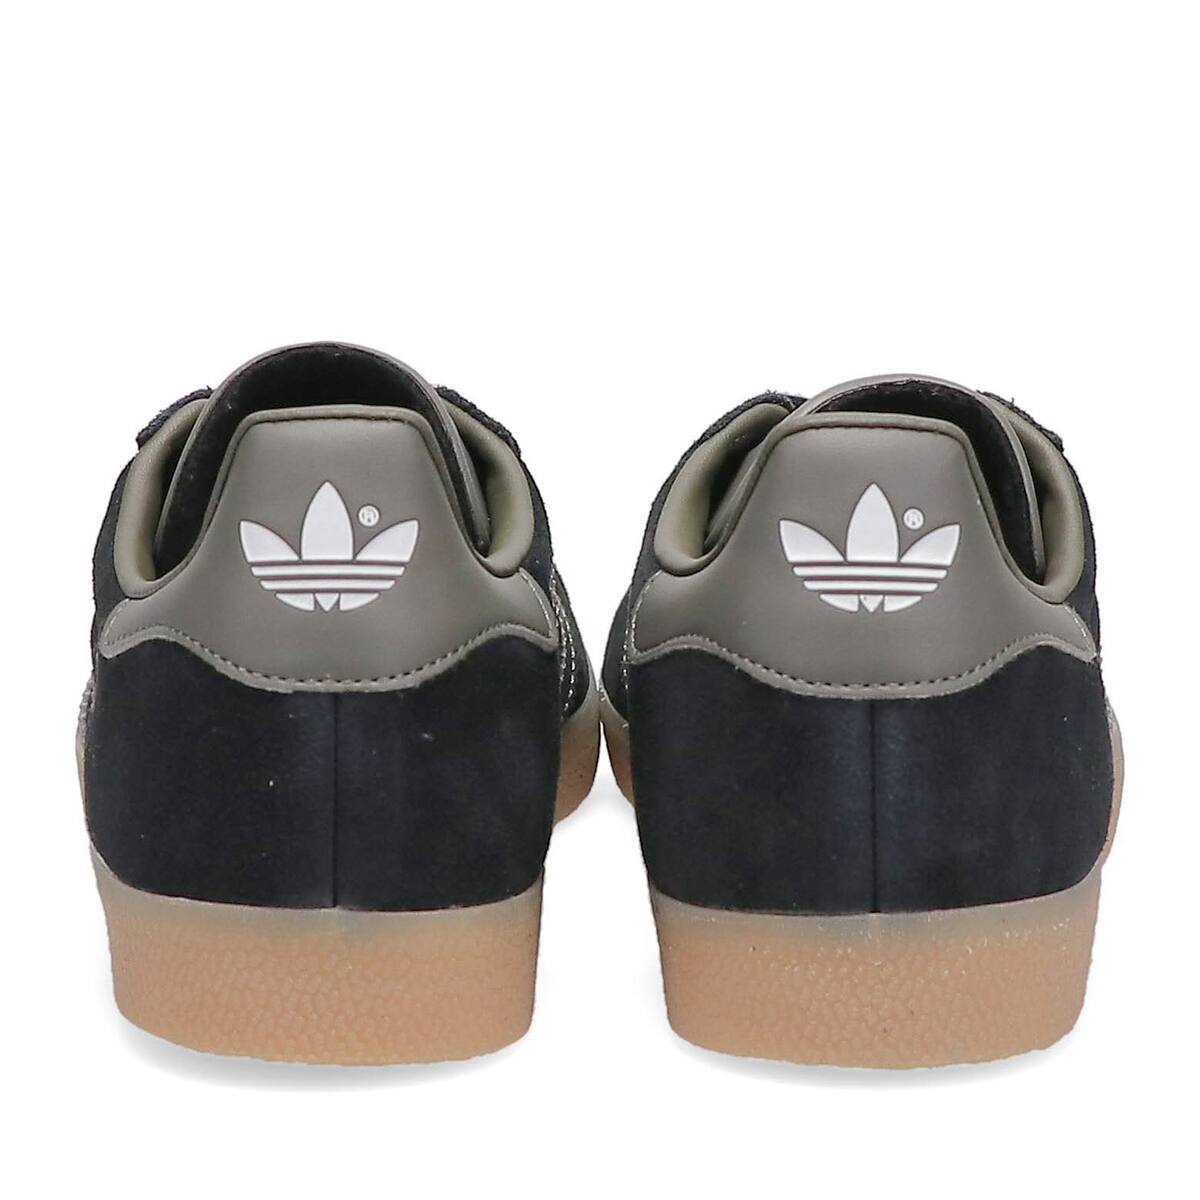 adidas GAZELLE CORE BLACK/PANTONE/FOOTWEAR WHITE 22FW-I